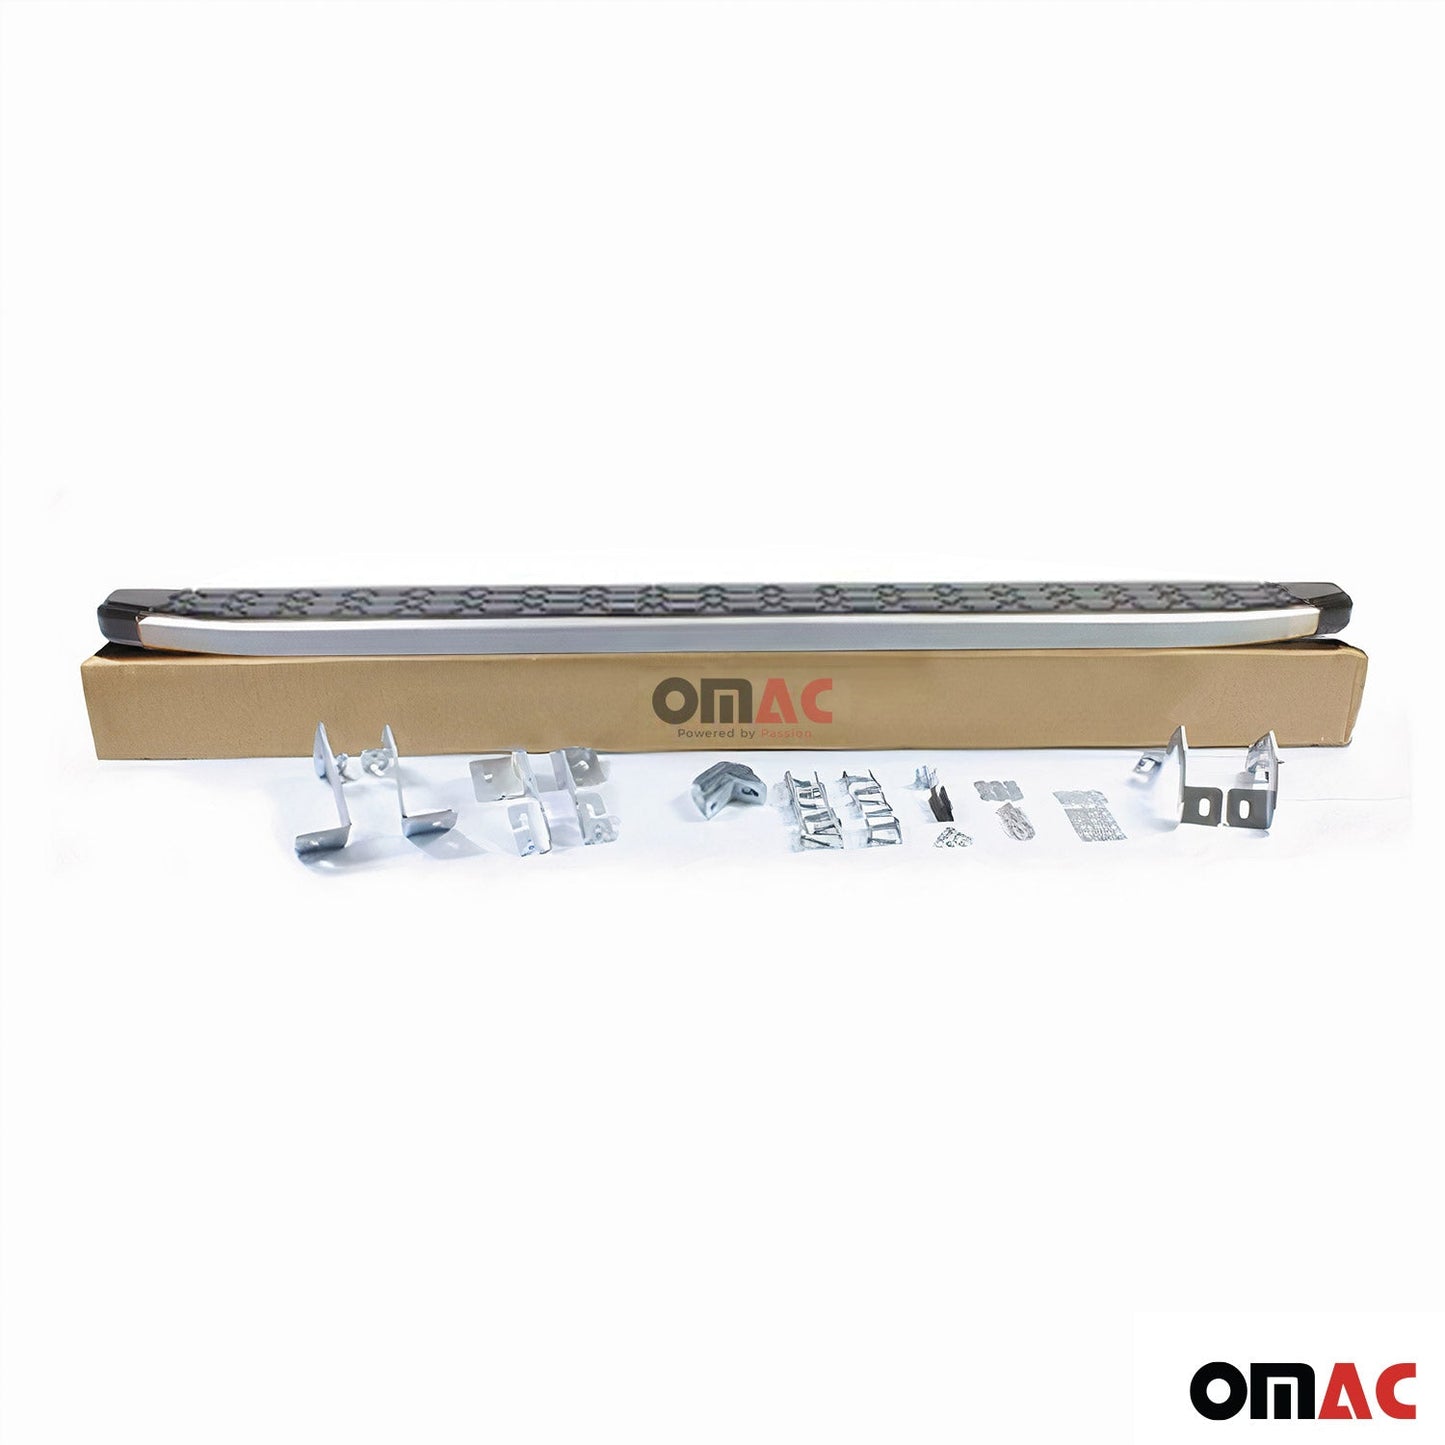 OMAC Running Board Side Steps Nerf Bar for Subaru XV Crosstrek 2013-2015 Black Silver 6802984A